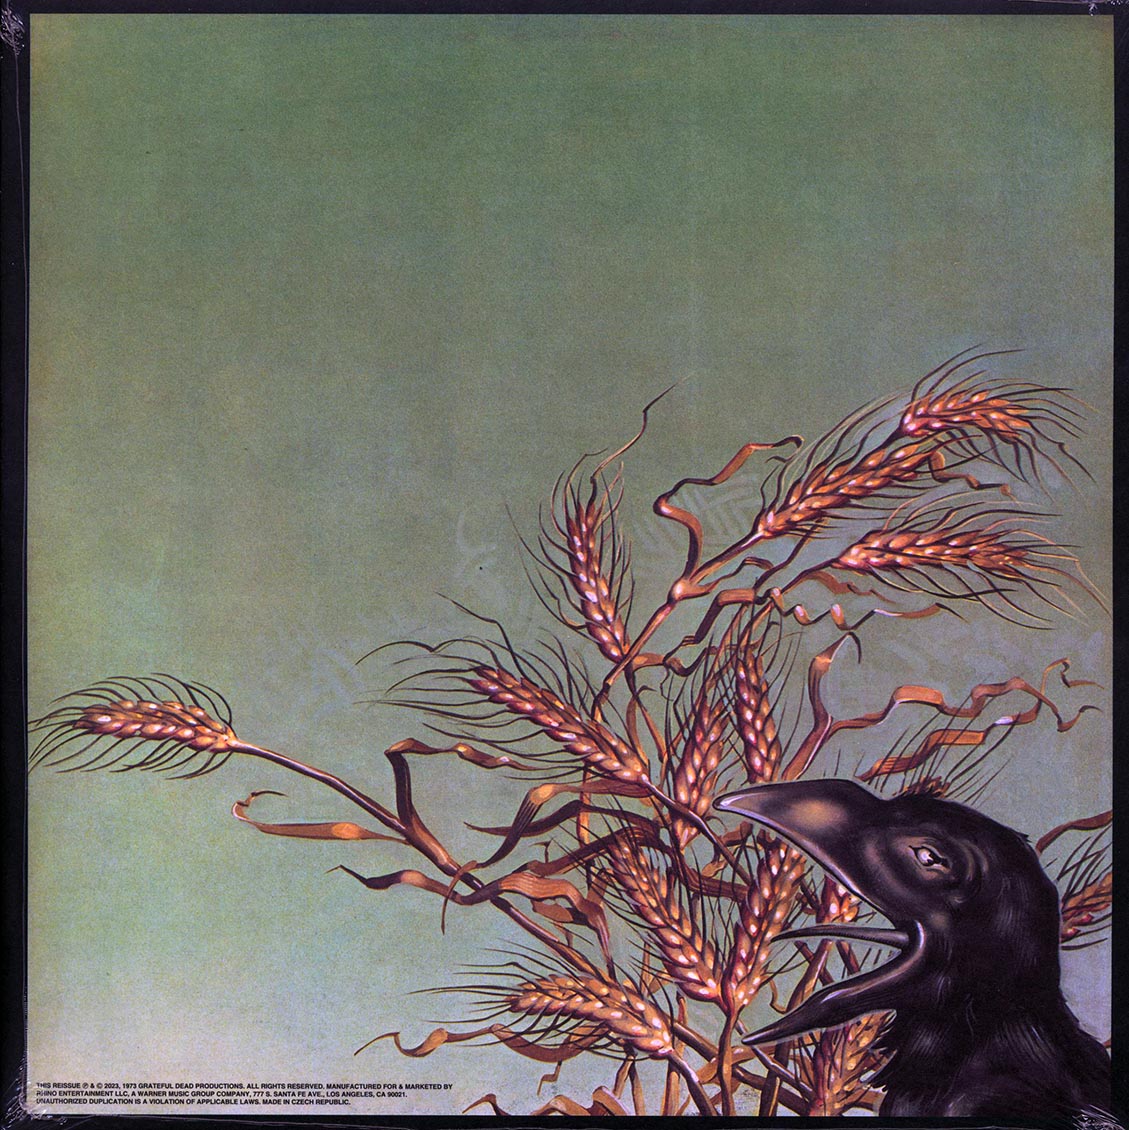 Grateful Dead - Wake Of The Flood (50th Anniv Ed) (180g) (remastered) LP 603497833849